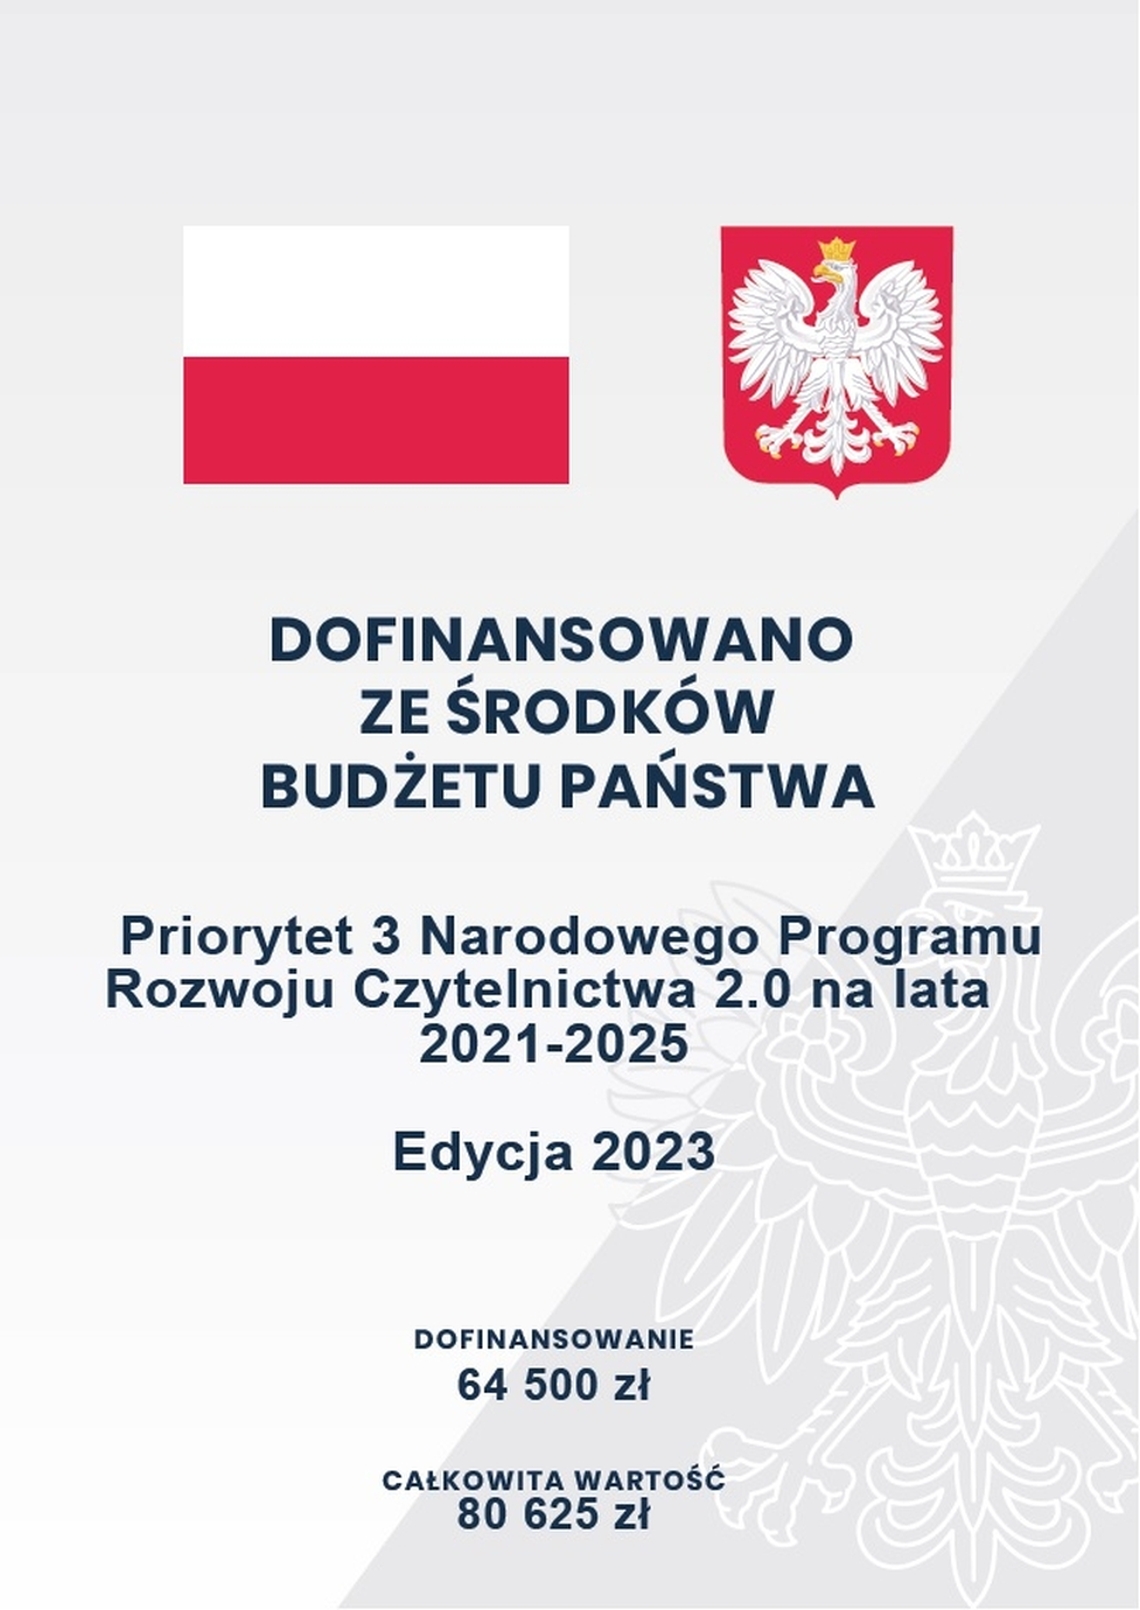 Priorytet 3 Narodowego Programu Rozwoju Czytelnictwa 2.0 na lata 2021-2025